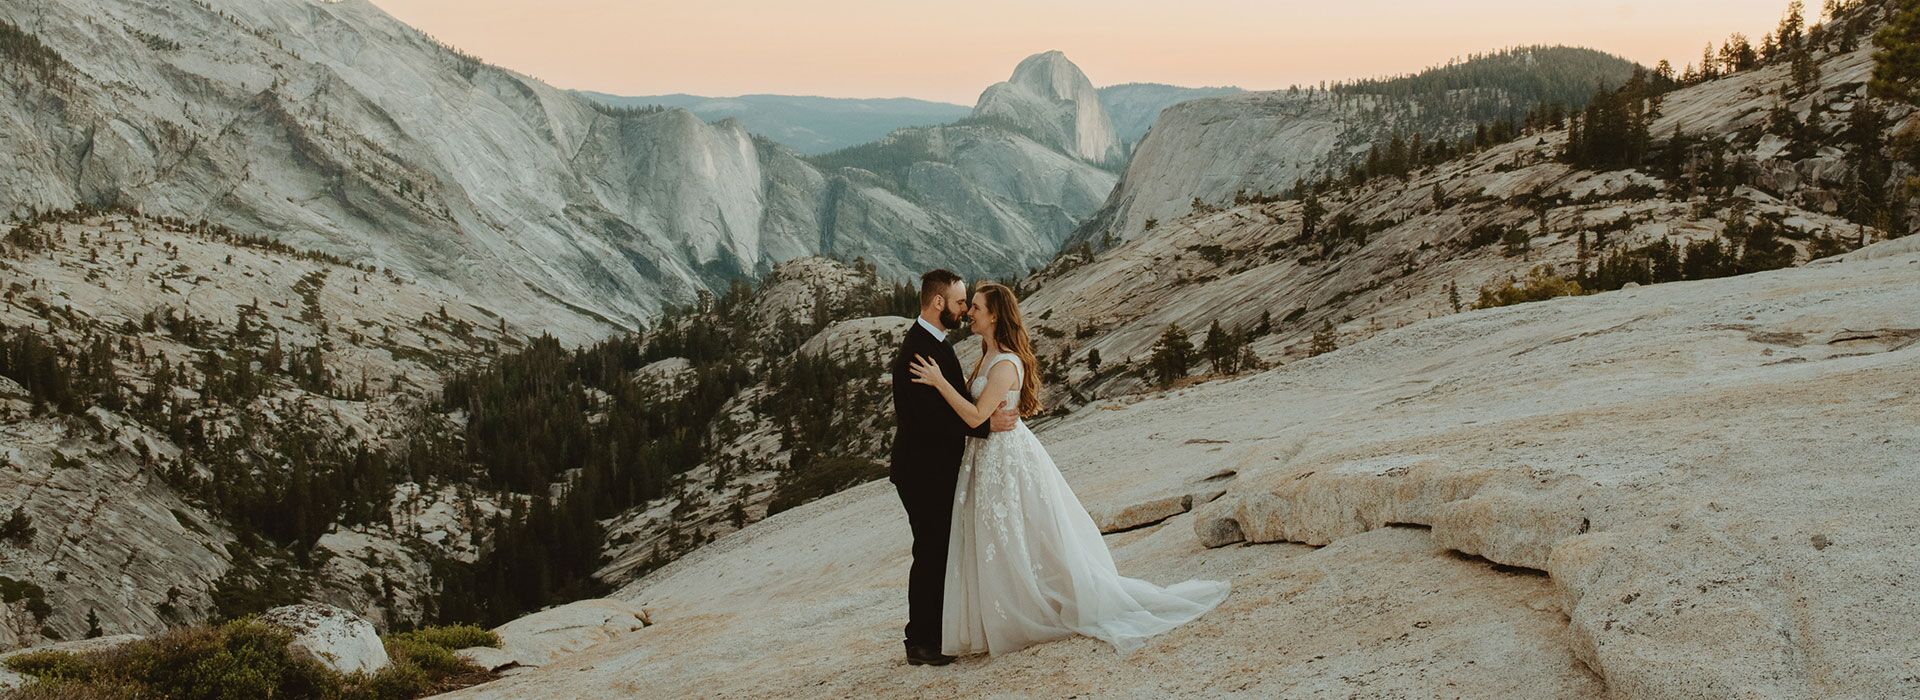 A Yosemite elopement